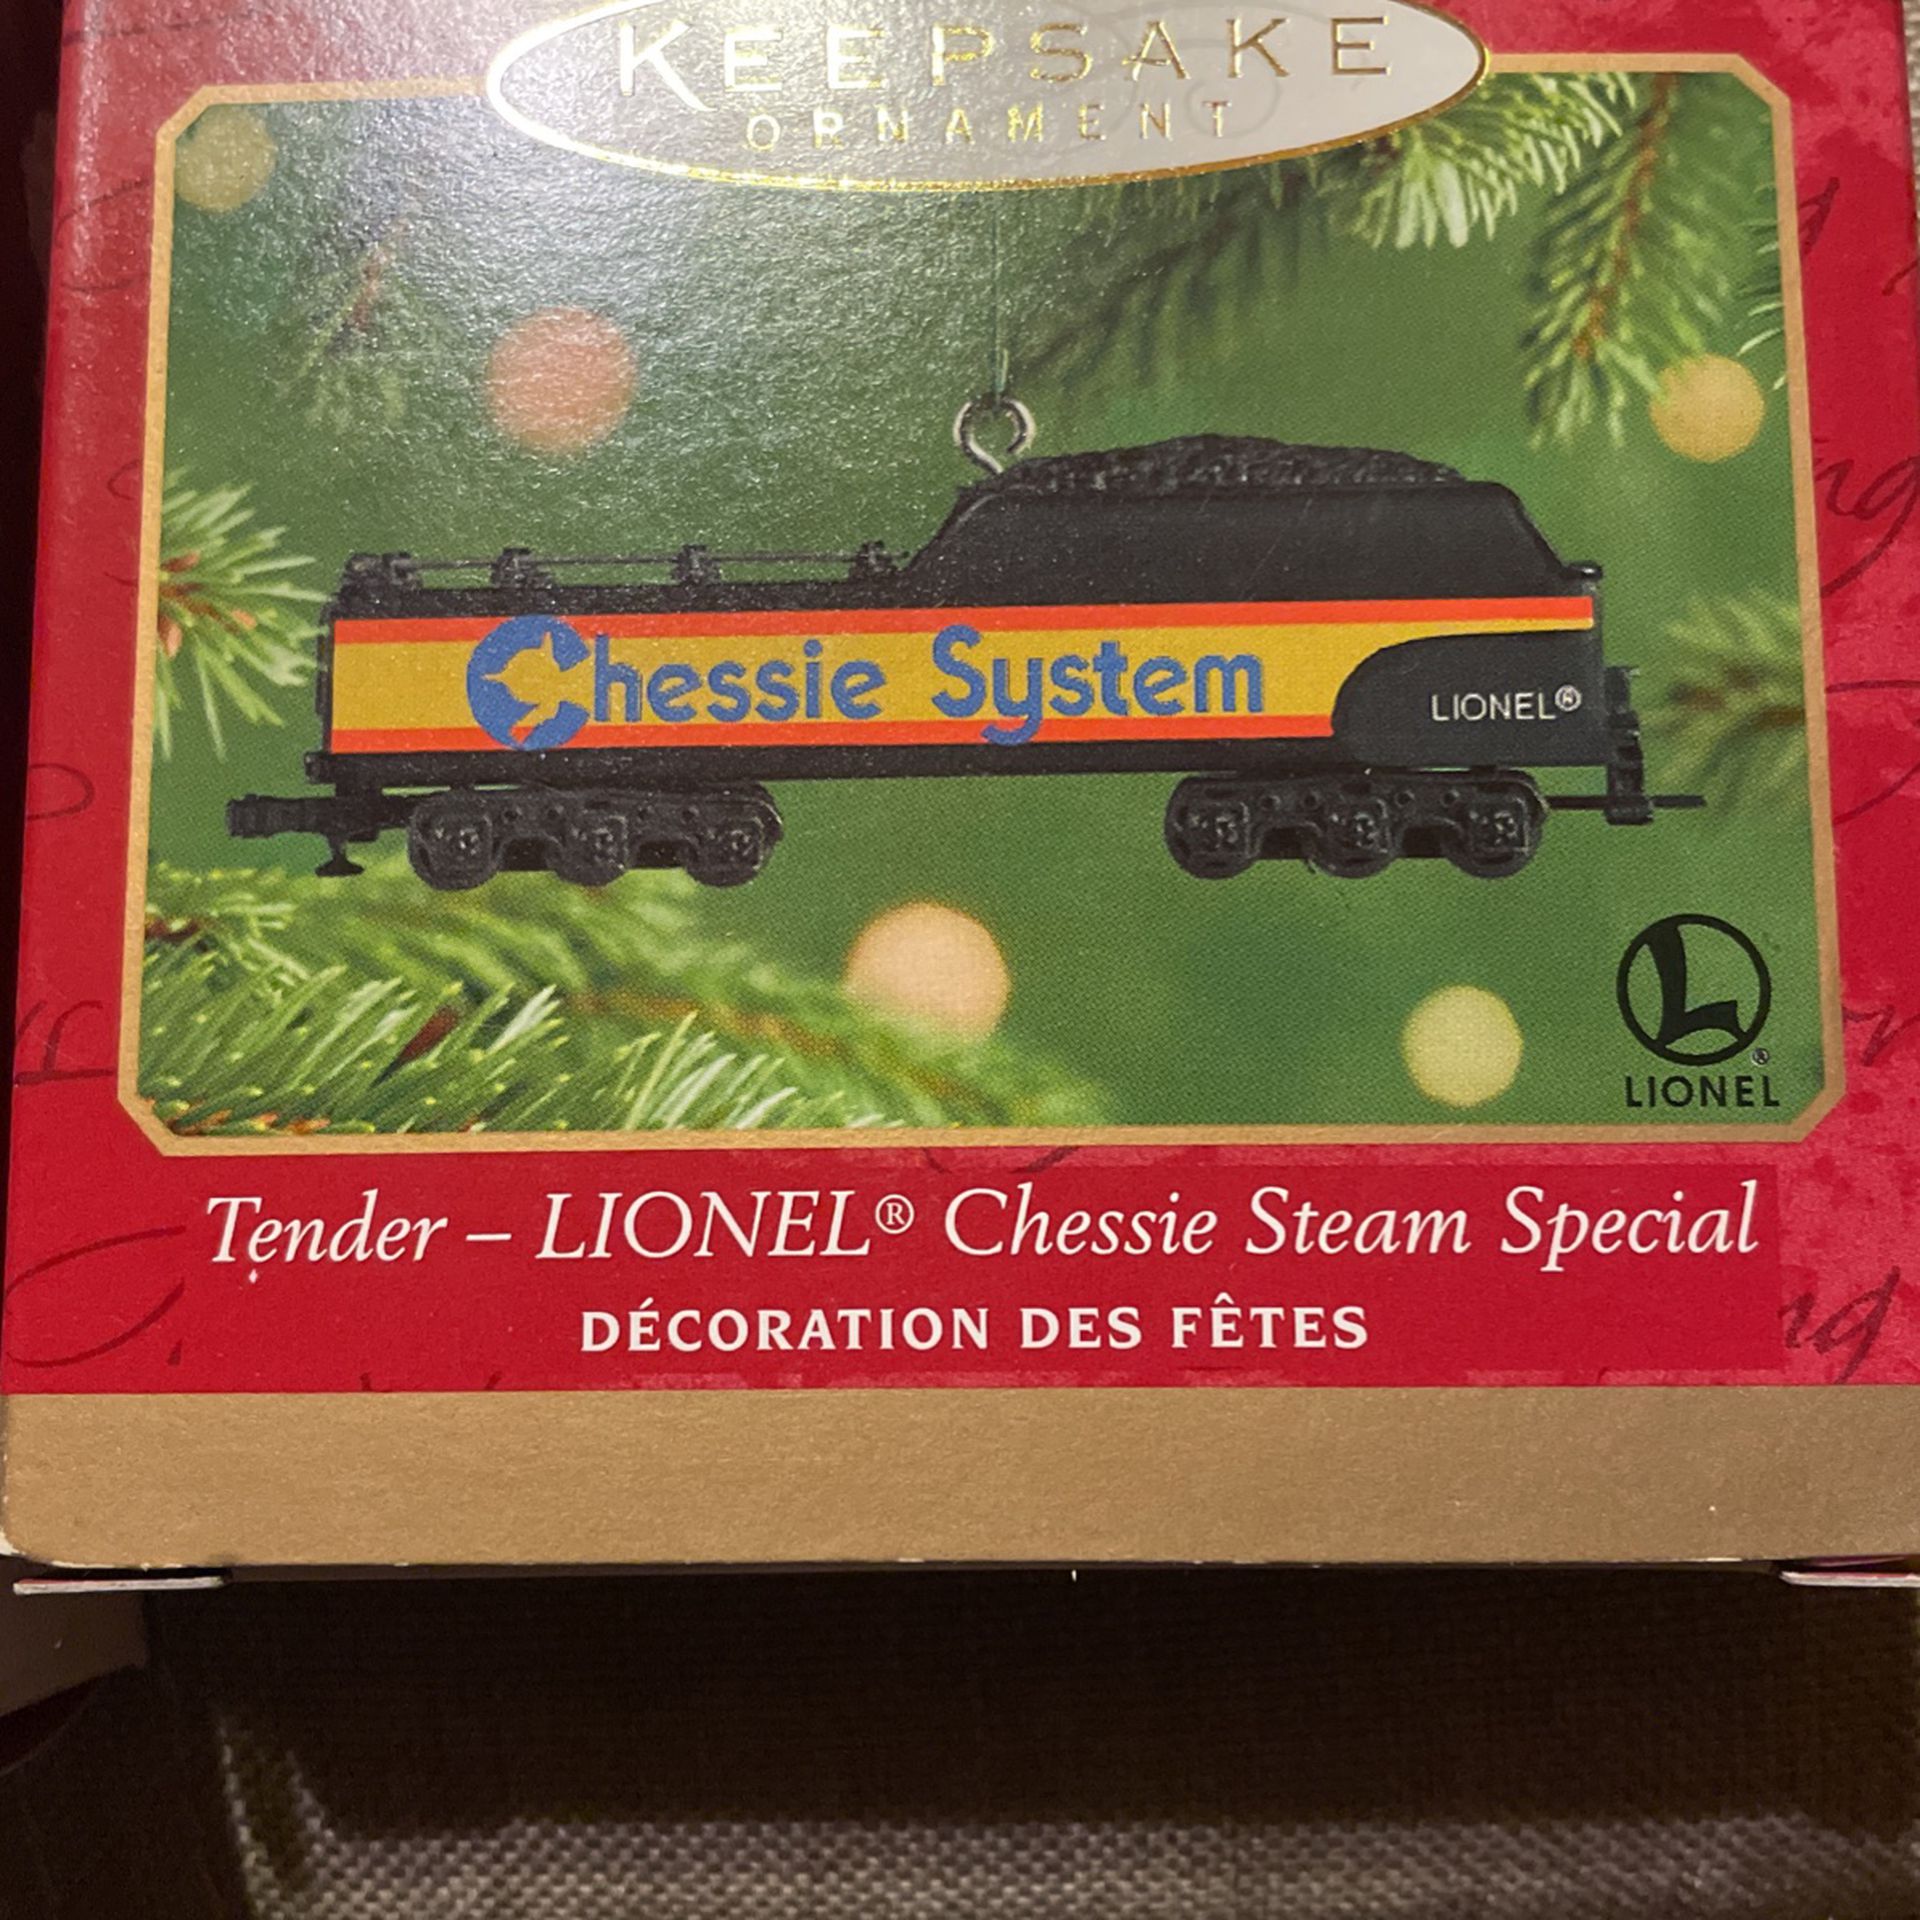 Lionel Chessie Steam Special Ornament Set